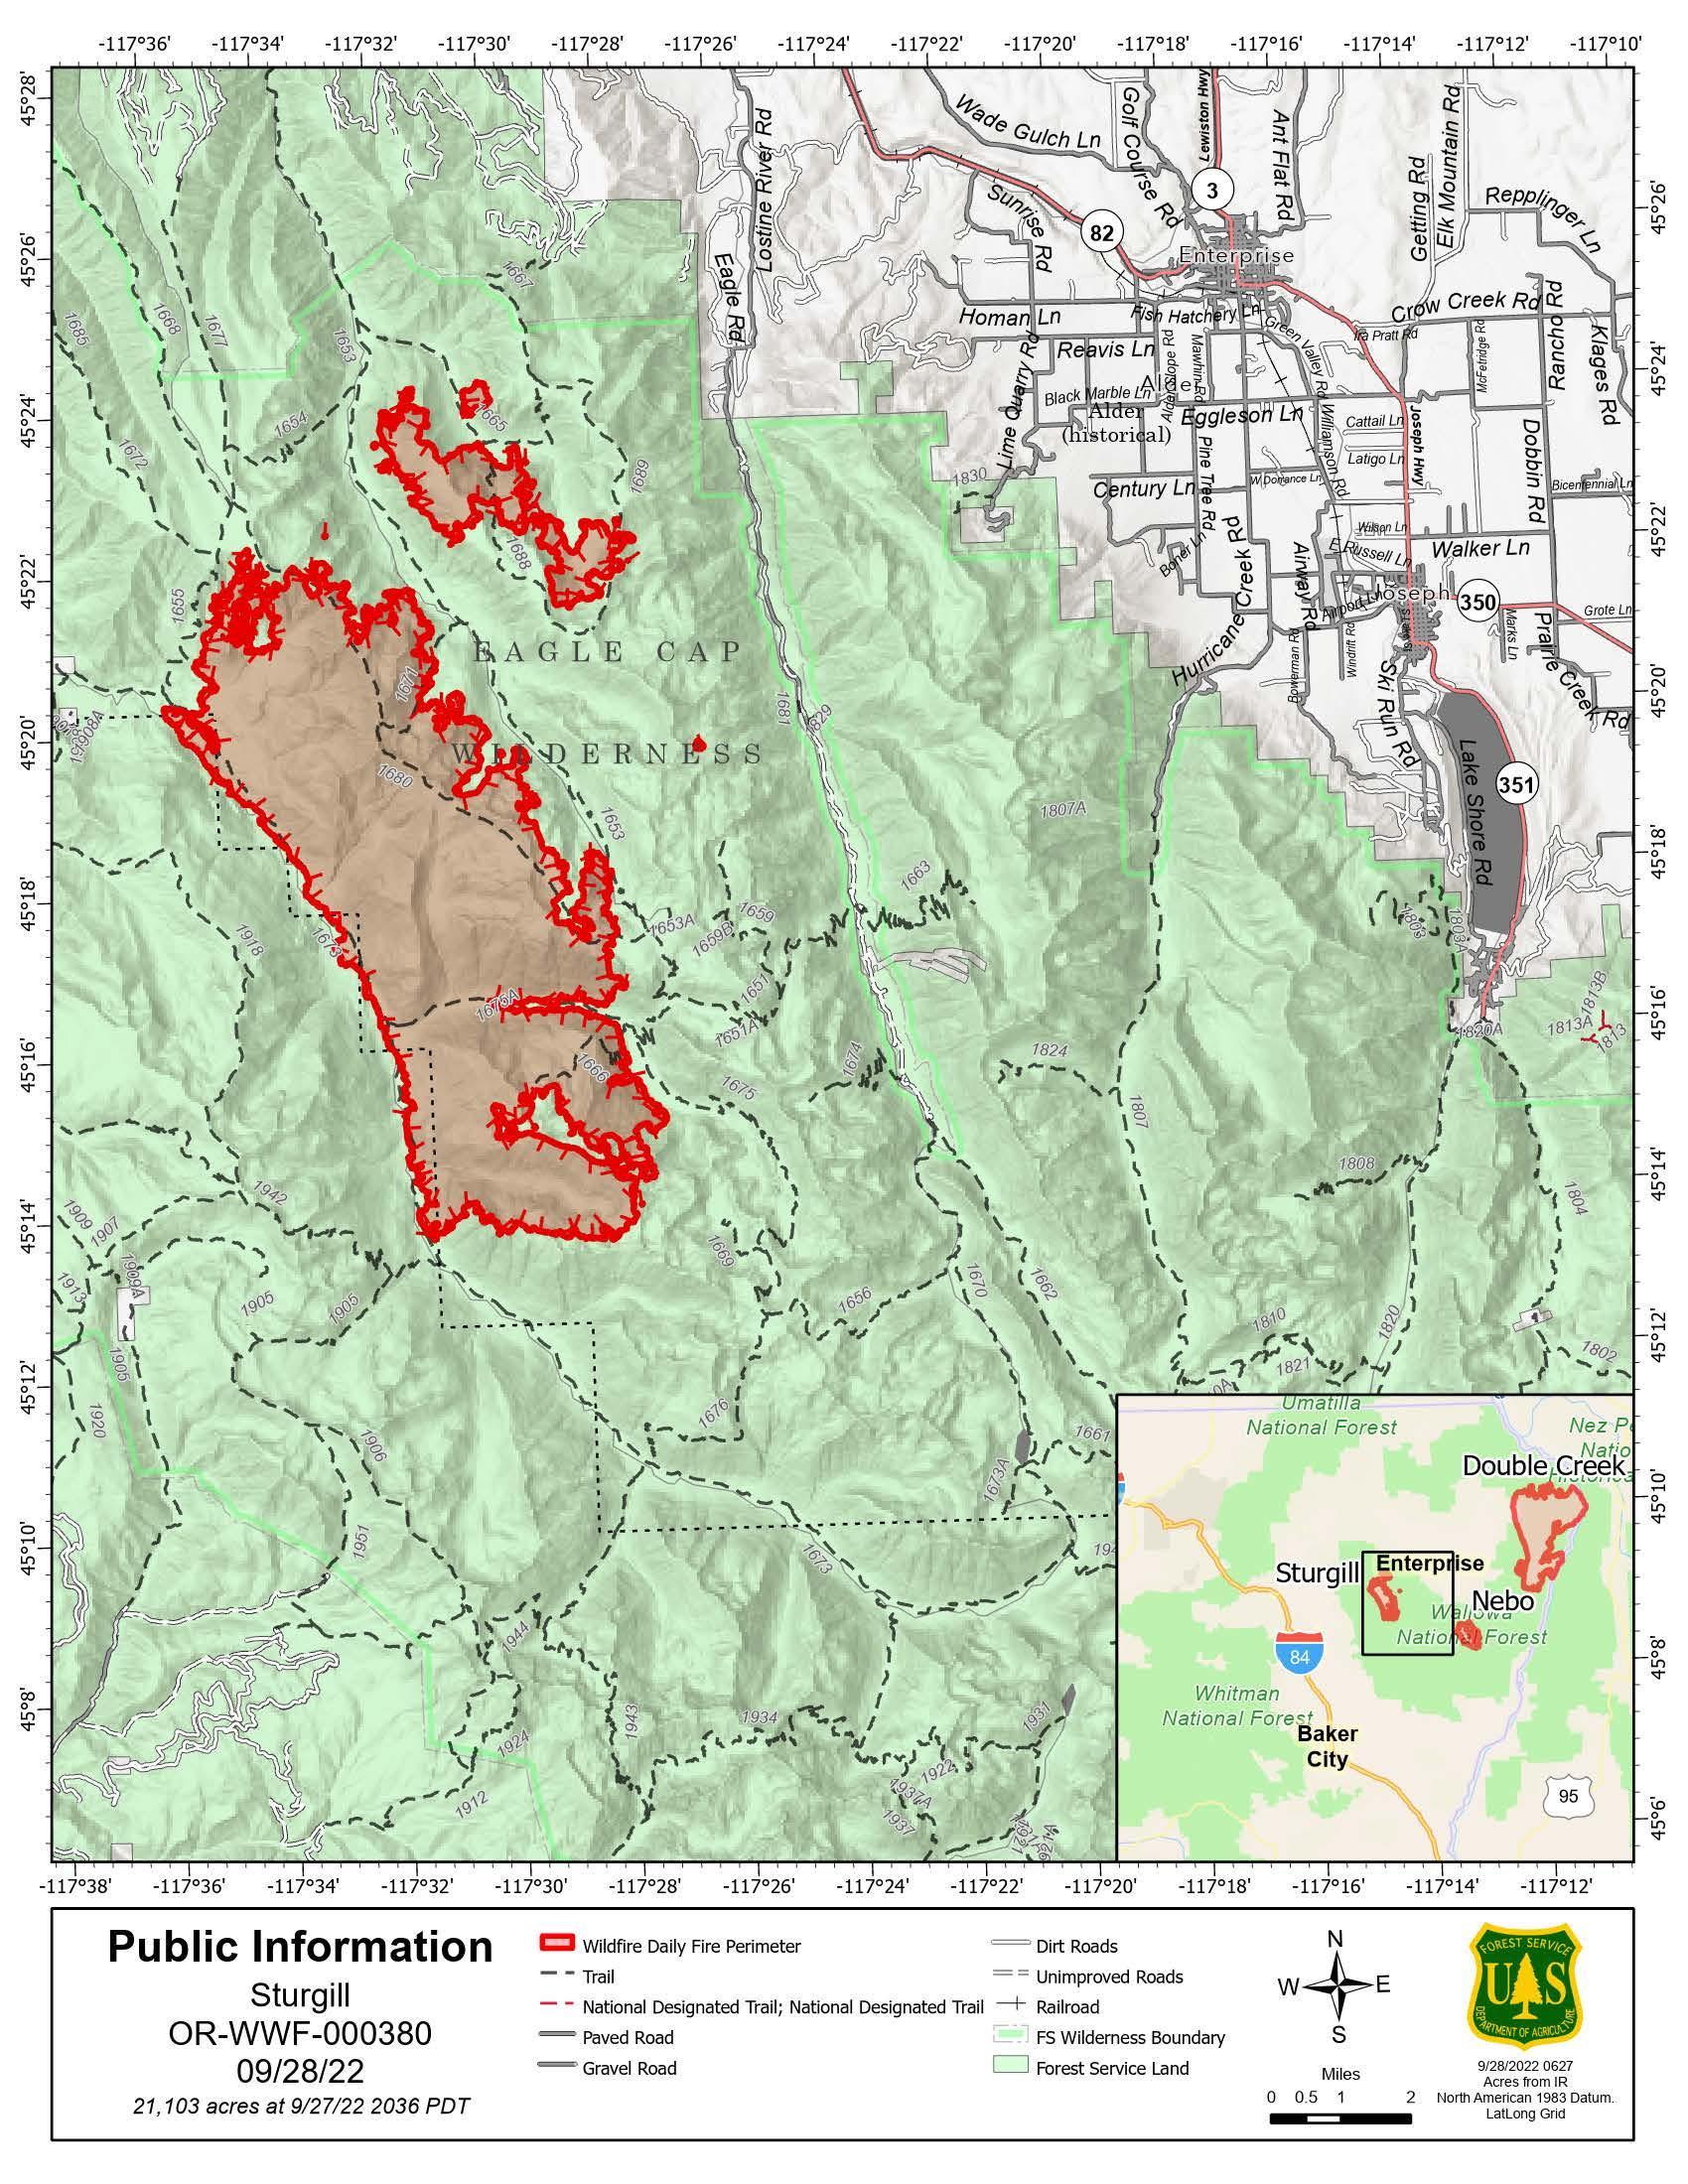 Goat Mountain 2 Fire Map - 09/28/2022